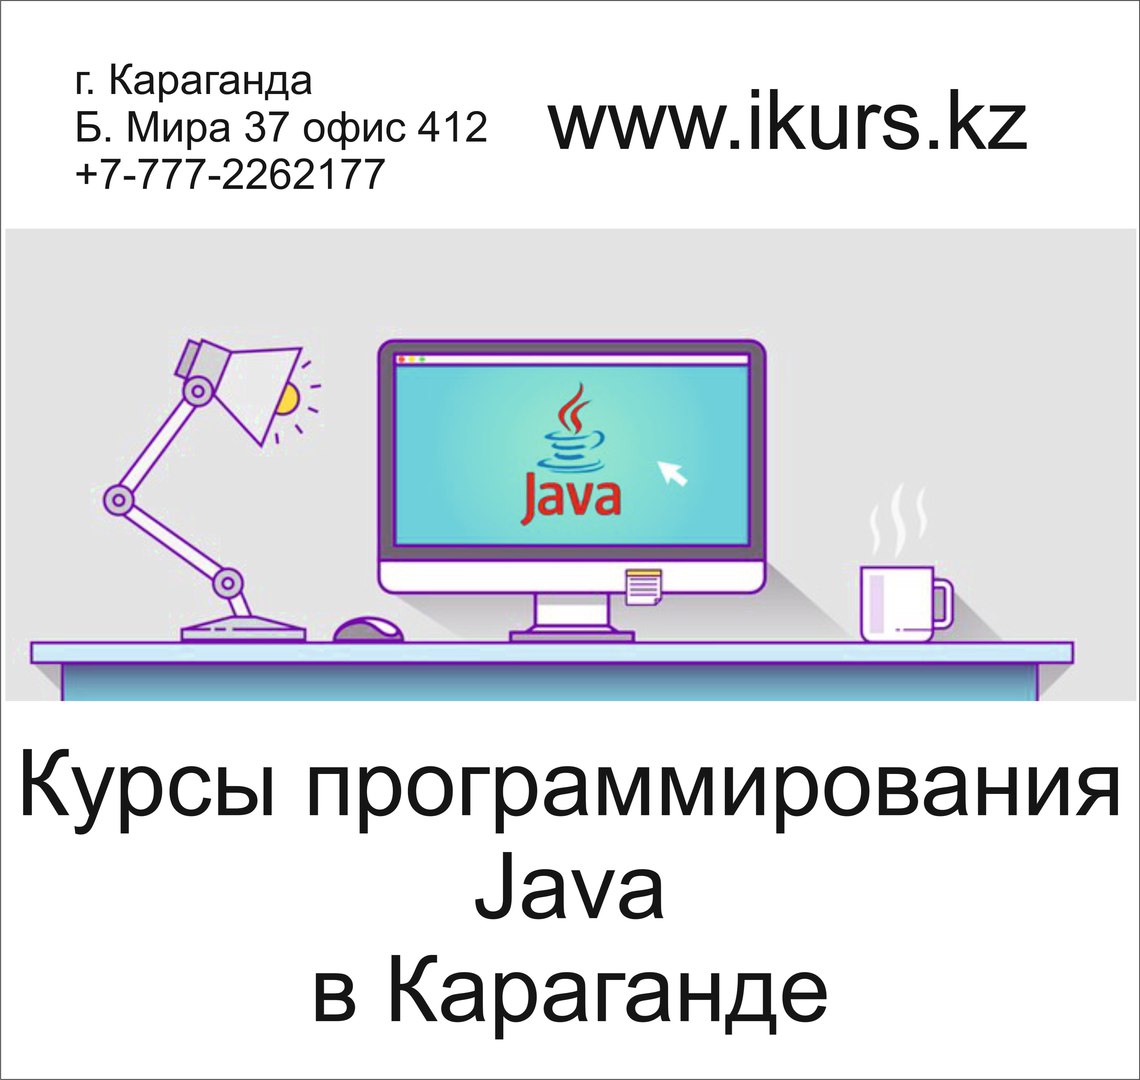 Курсы программирования Java в Караганде. Обучающий центр Ikurs